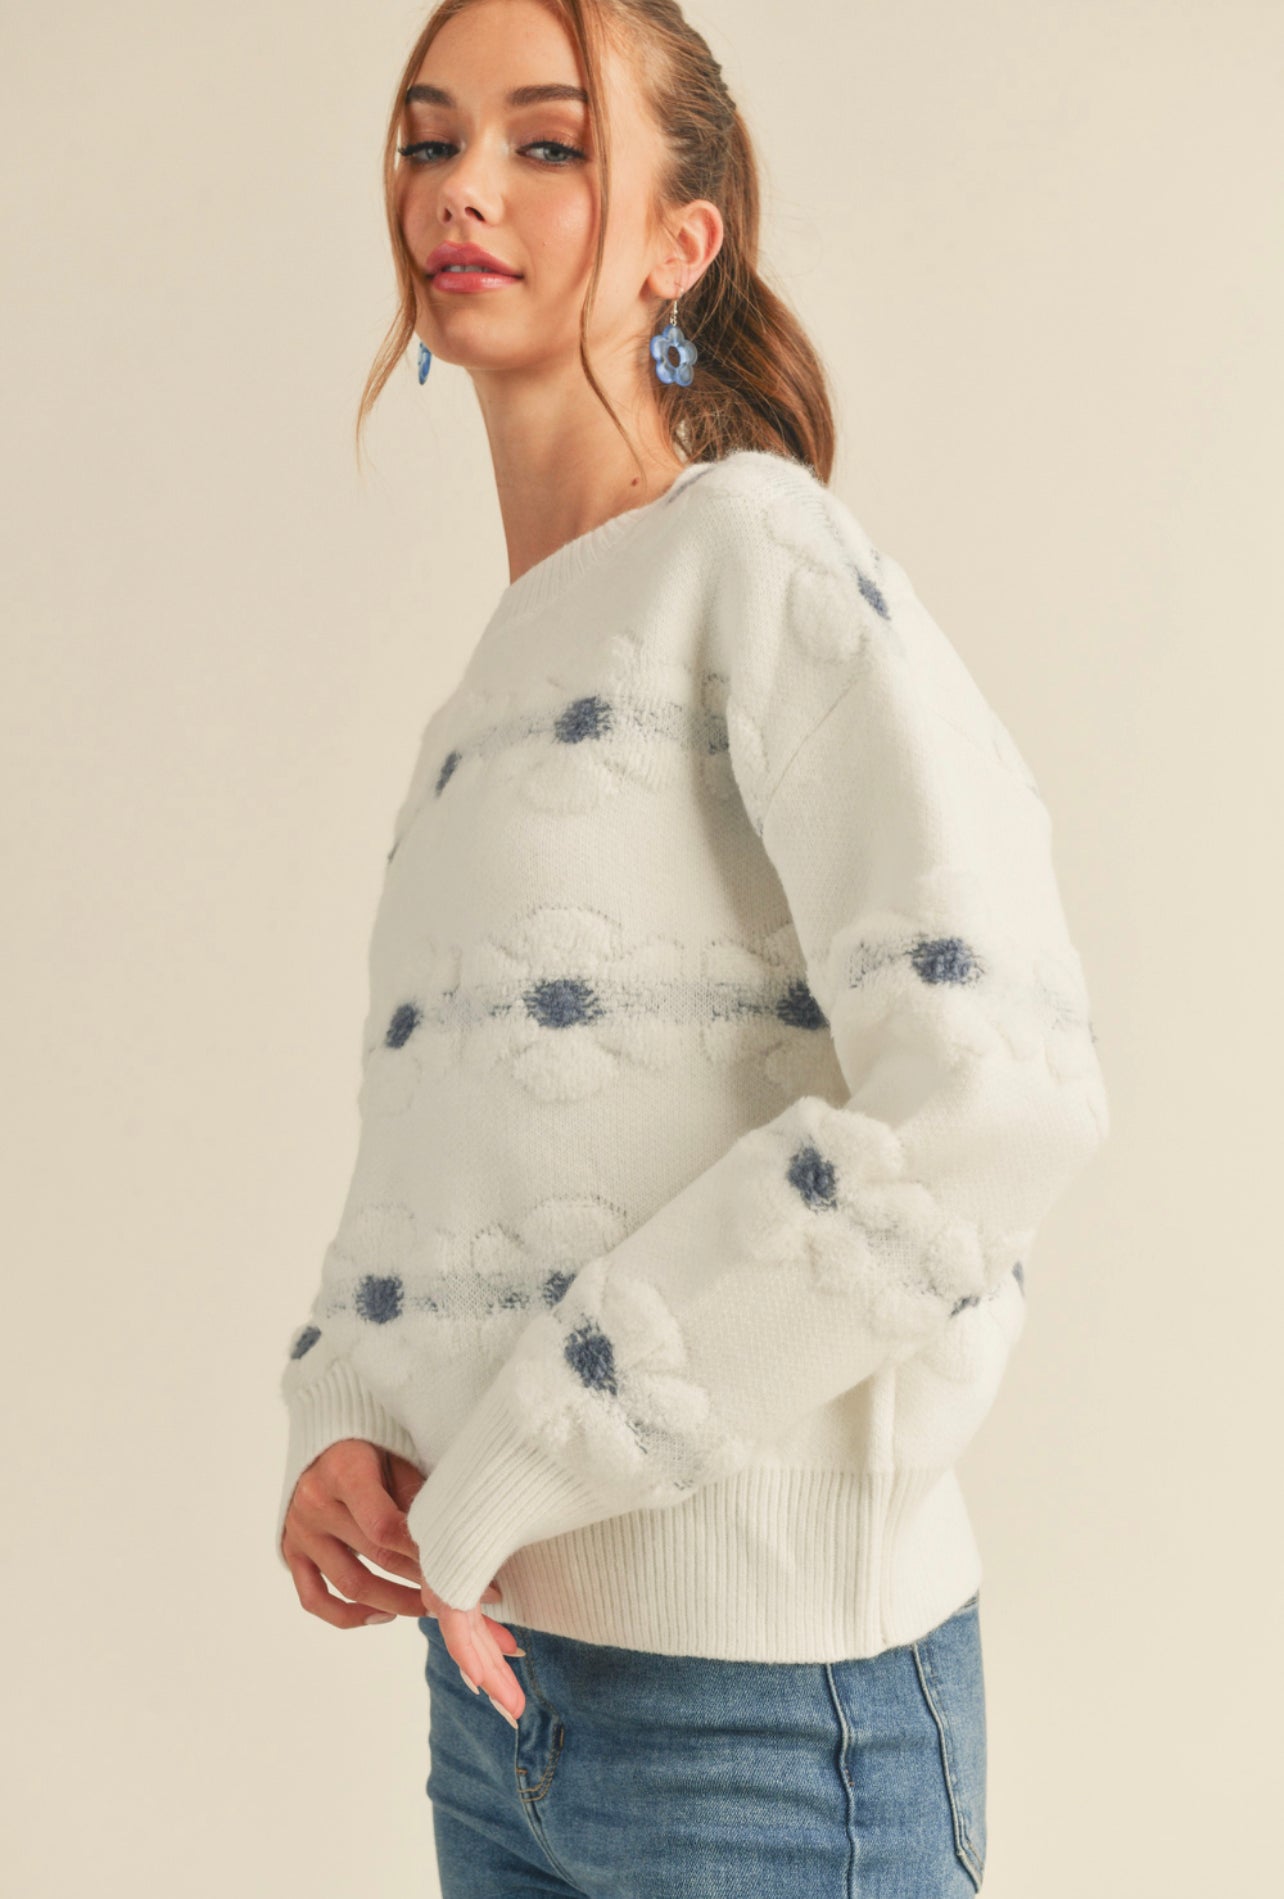 Snuggled Daisy Days Sweater